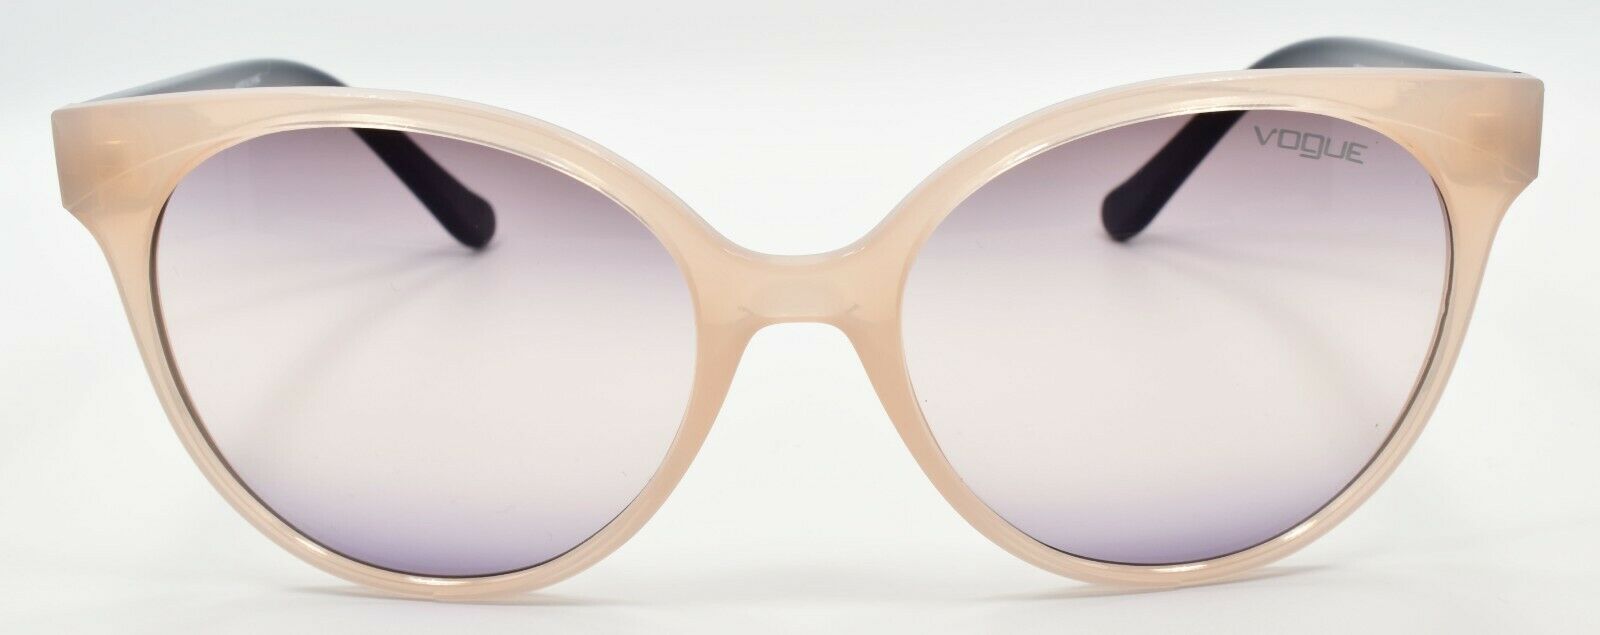 2-Vogue VO5246-S 26710J Women's Sunglasses Opal Pink / Pink Blue Gradient-8053672968415-IKSpecs